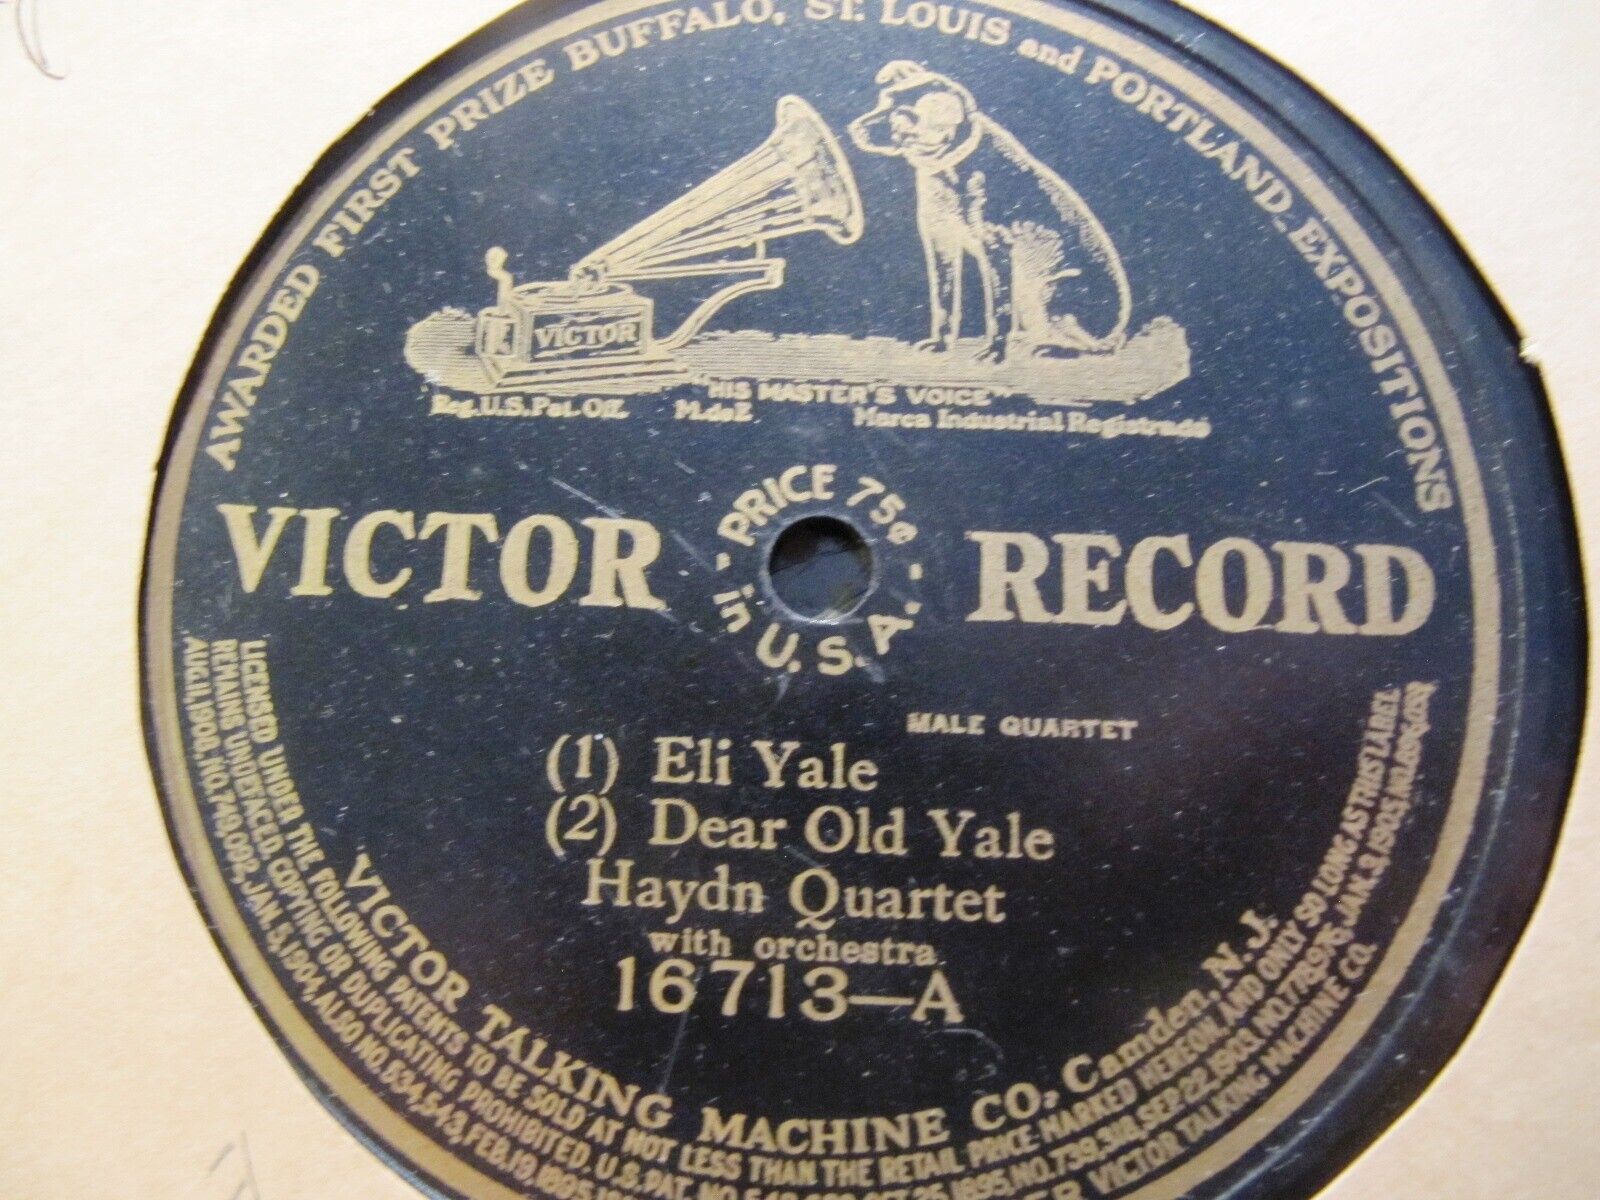 1910 MEN OF YALE UNIVERSITY March/ Eli Yale HAYDN QUARTET Pryor's Band VICTOR